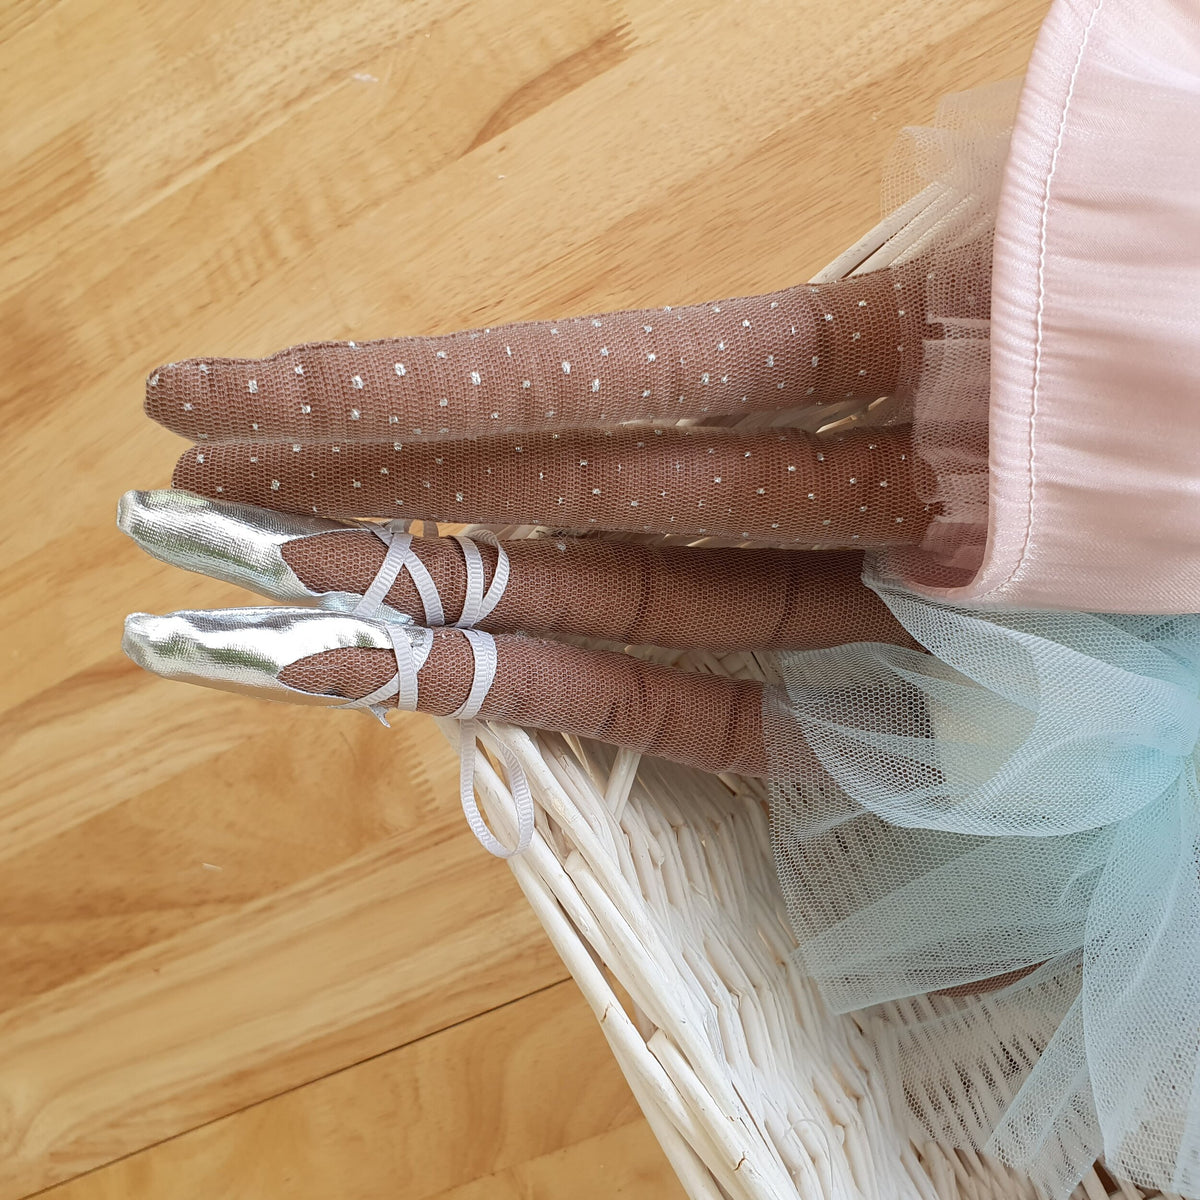 Philly Ballerina Soft Doll - Handmade doll Linen (39cm)